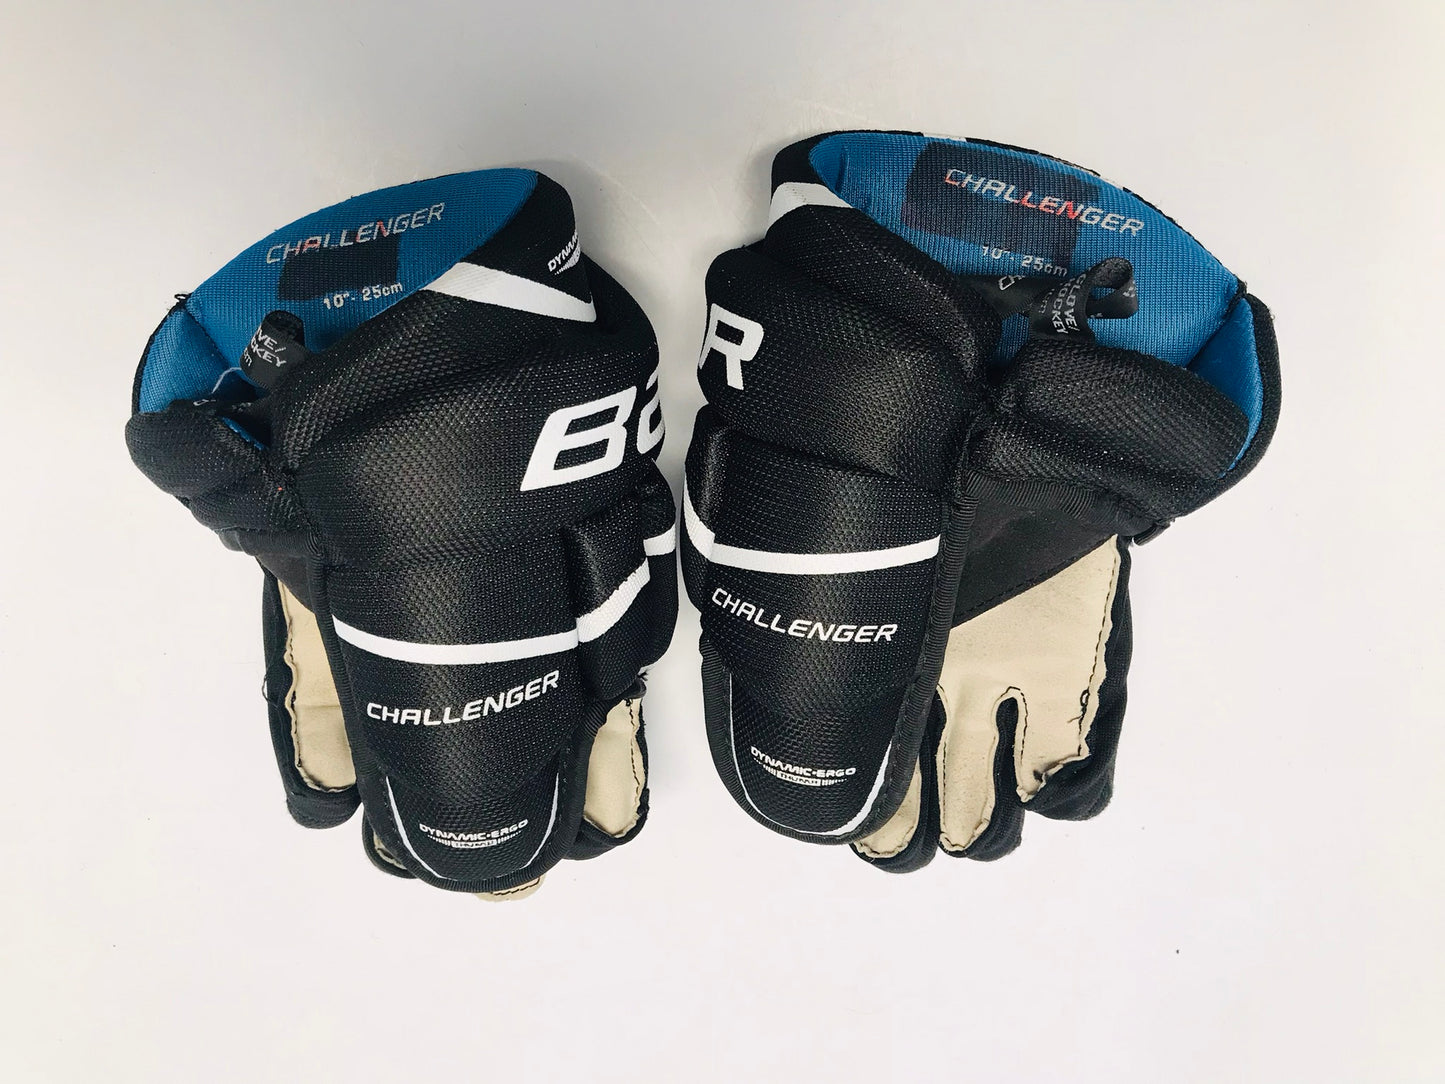 Hockey Gloves Child Size 10 inch Bauer Challenger Black White Blue Like New